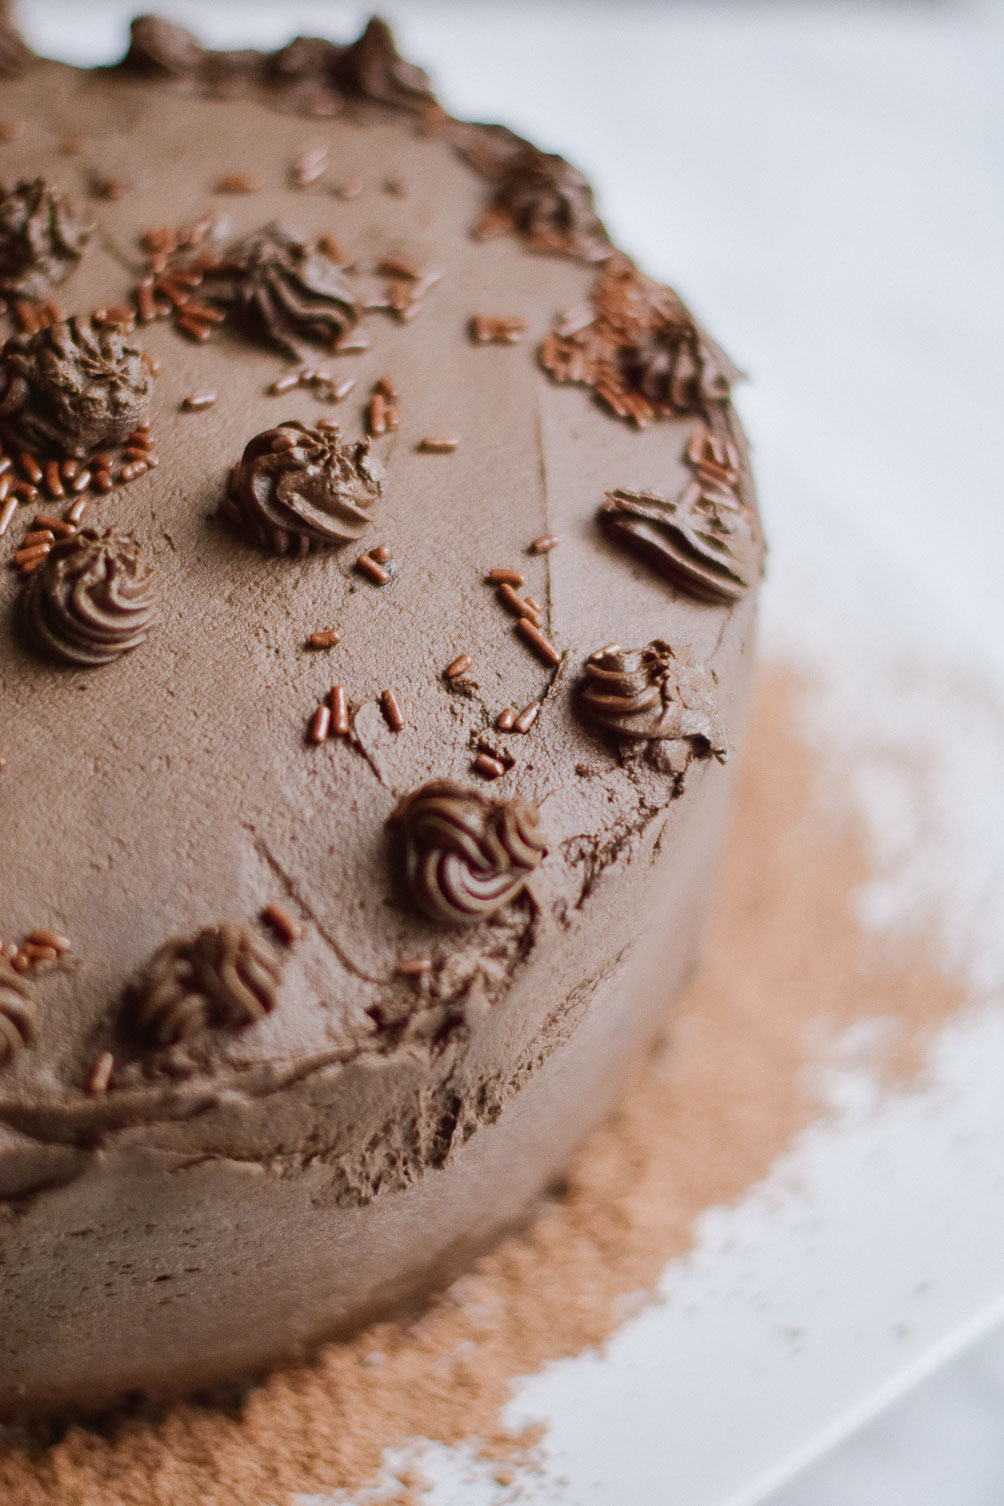 decadent holiday recipe for mudslide chocolate cake